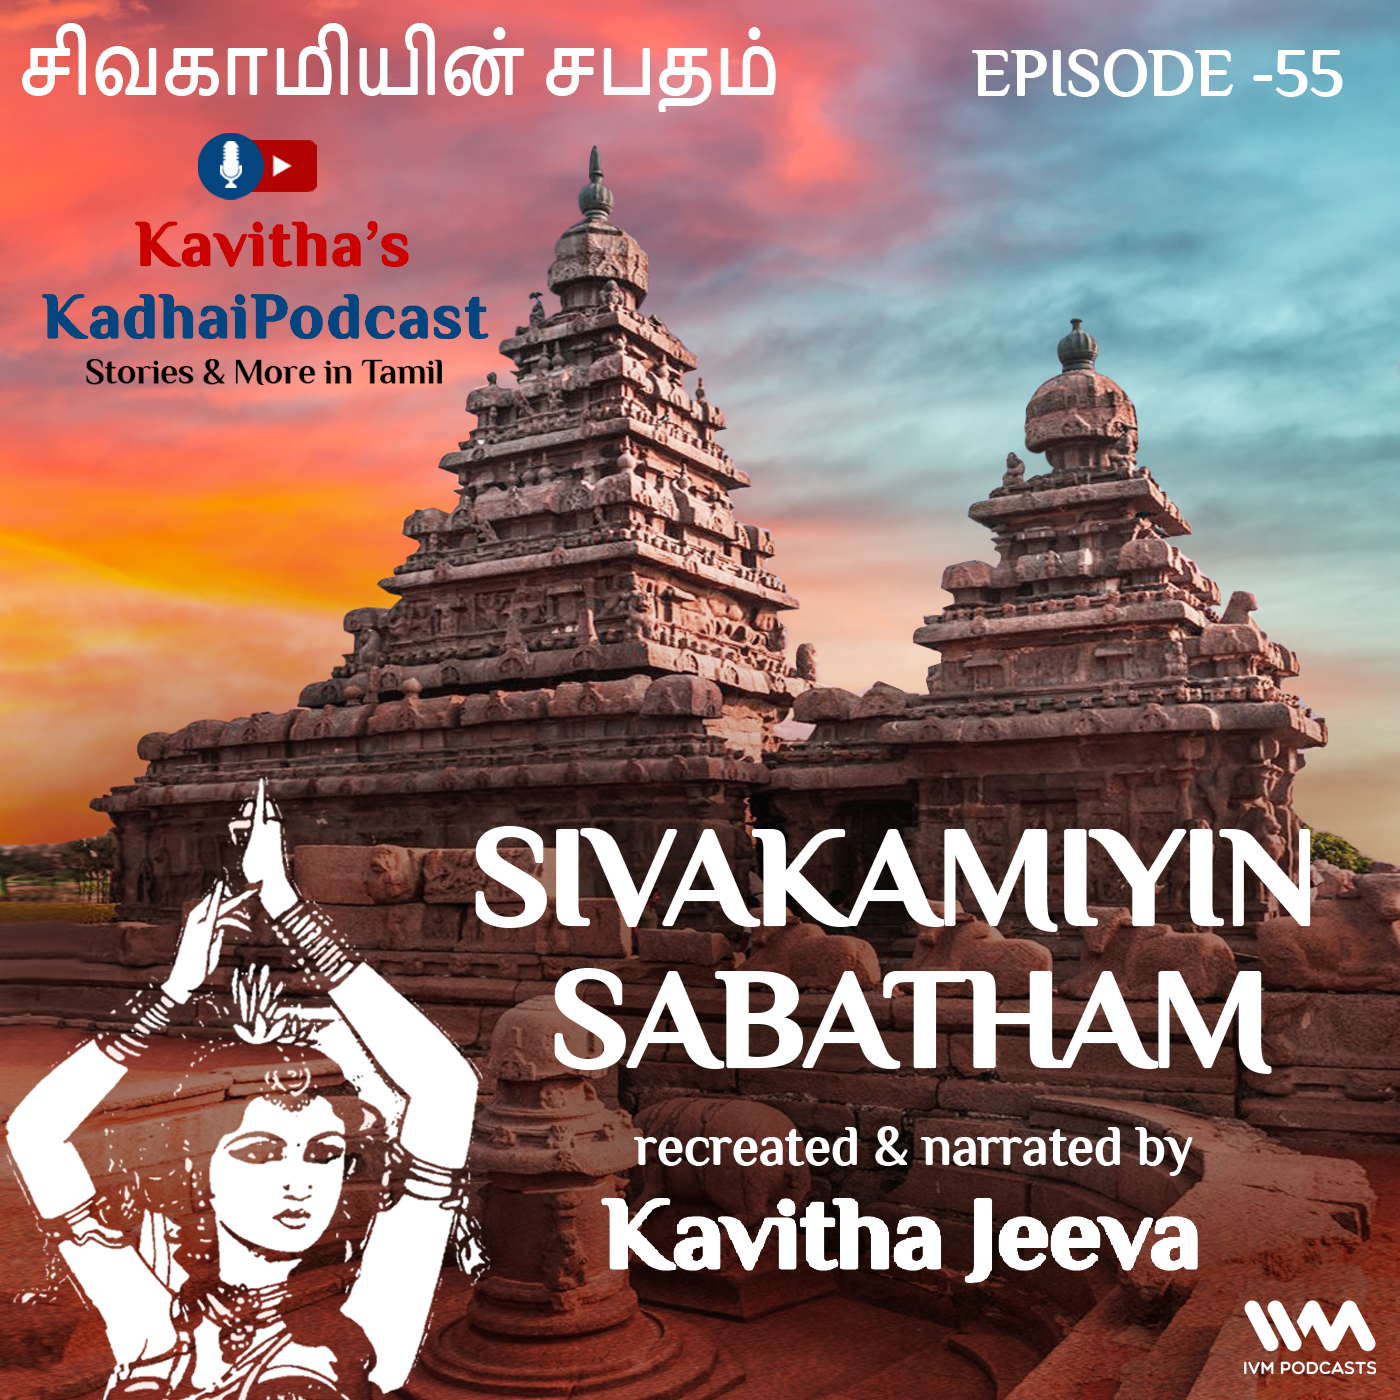 KadhaiPodcast's Sivakamiyin Sabatham - Episode # 55